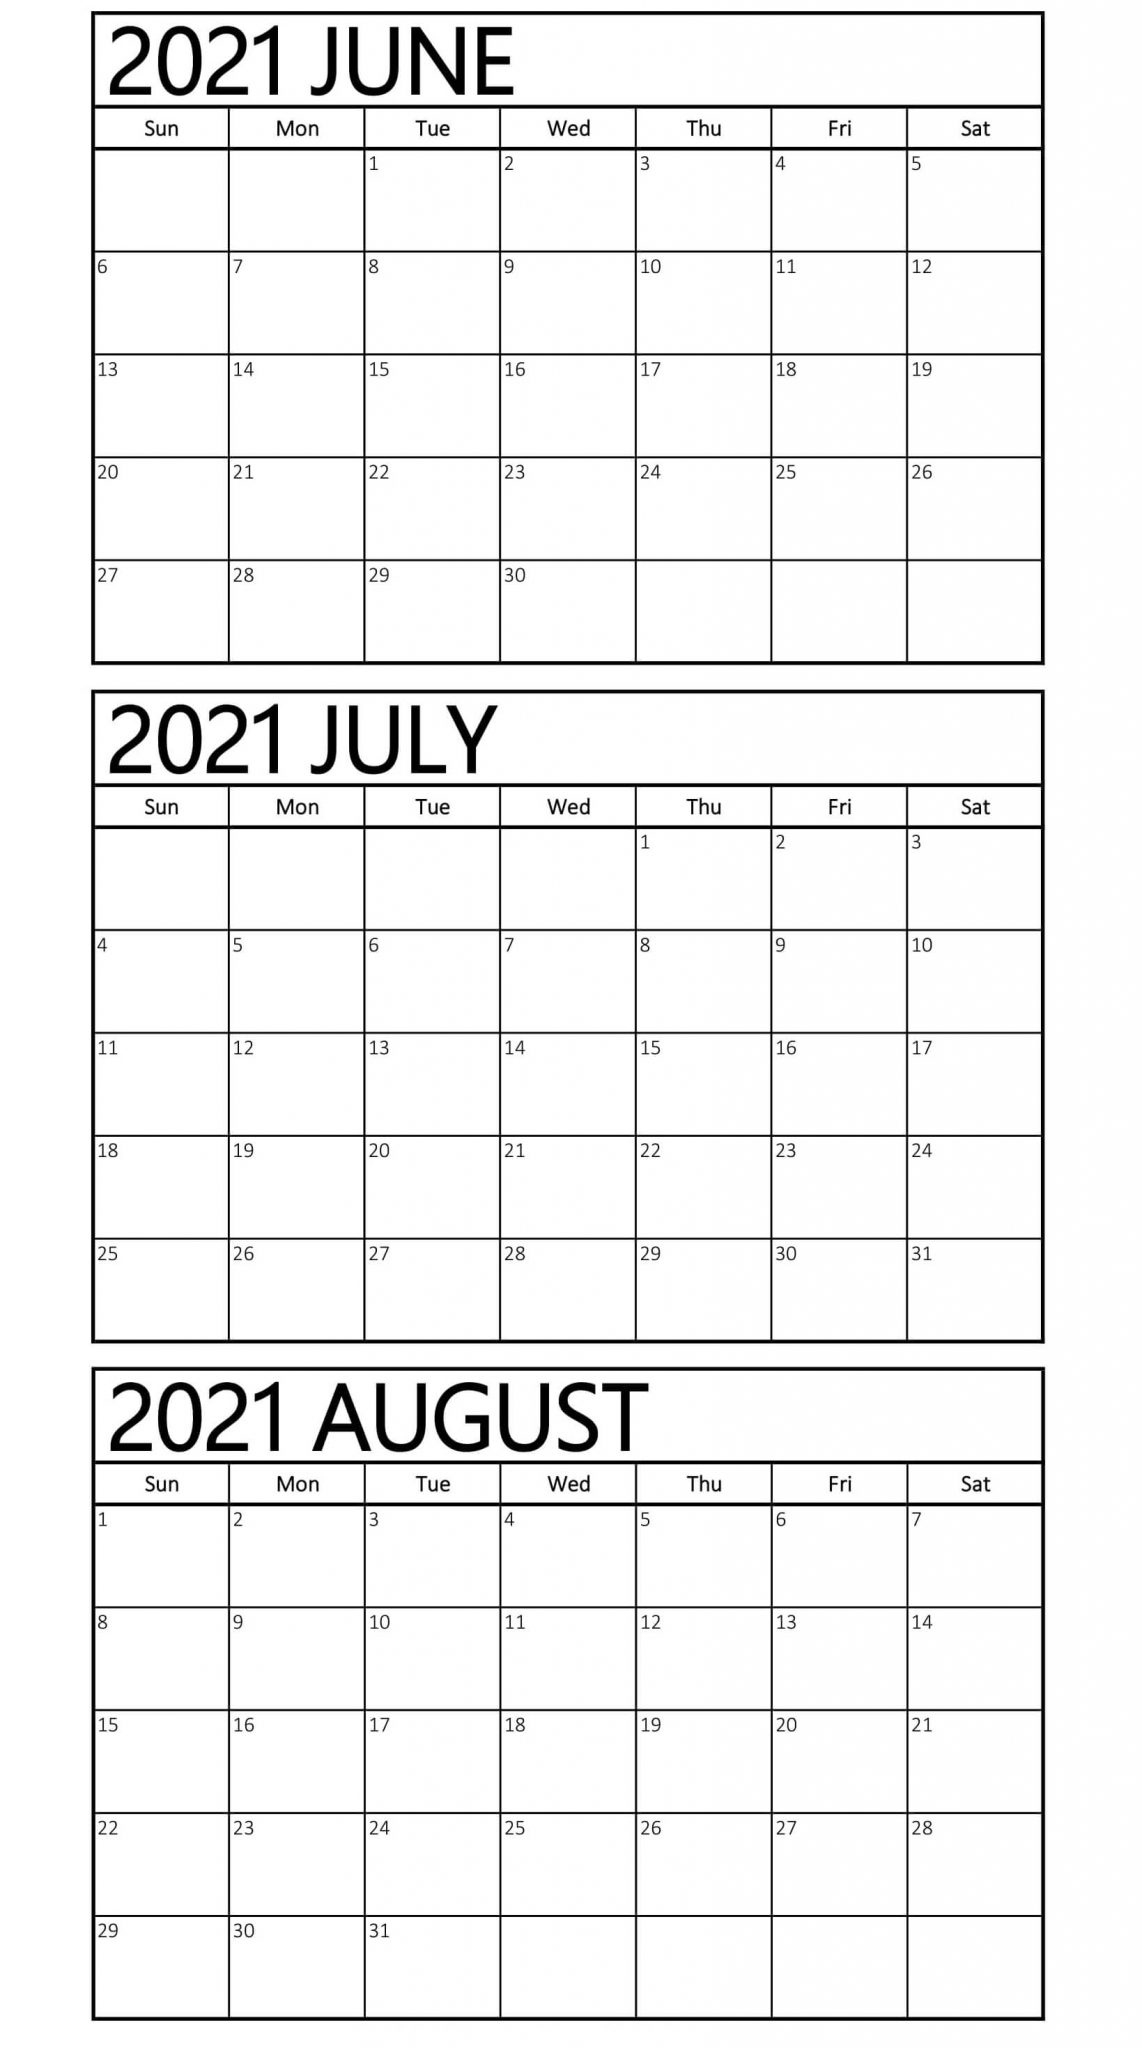 Free June July 2021 Calendar Printable With Holidays - 2021 Printable Calendar Template Free Blank Calendar June July August 2021